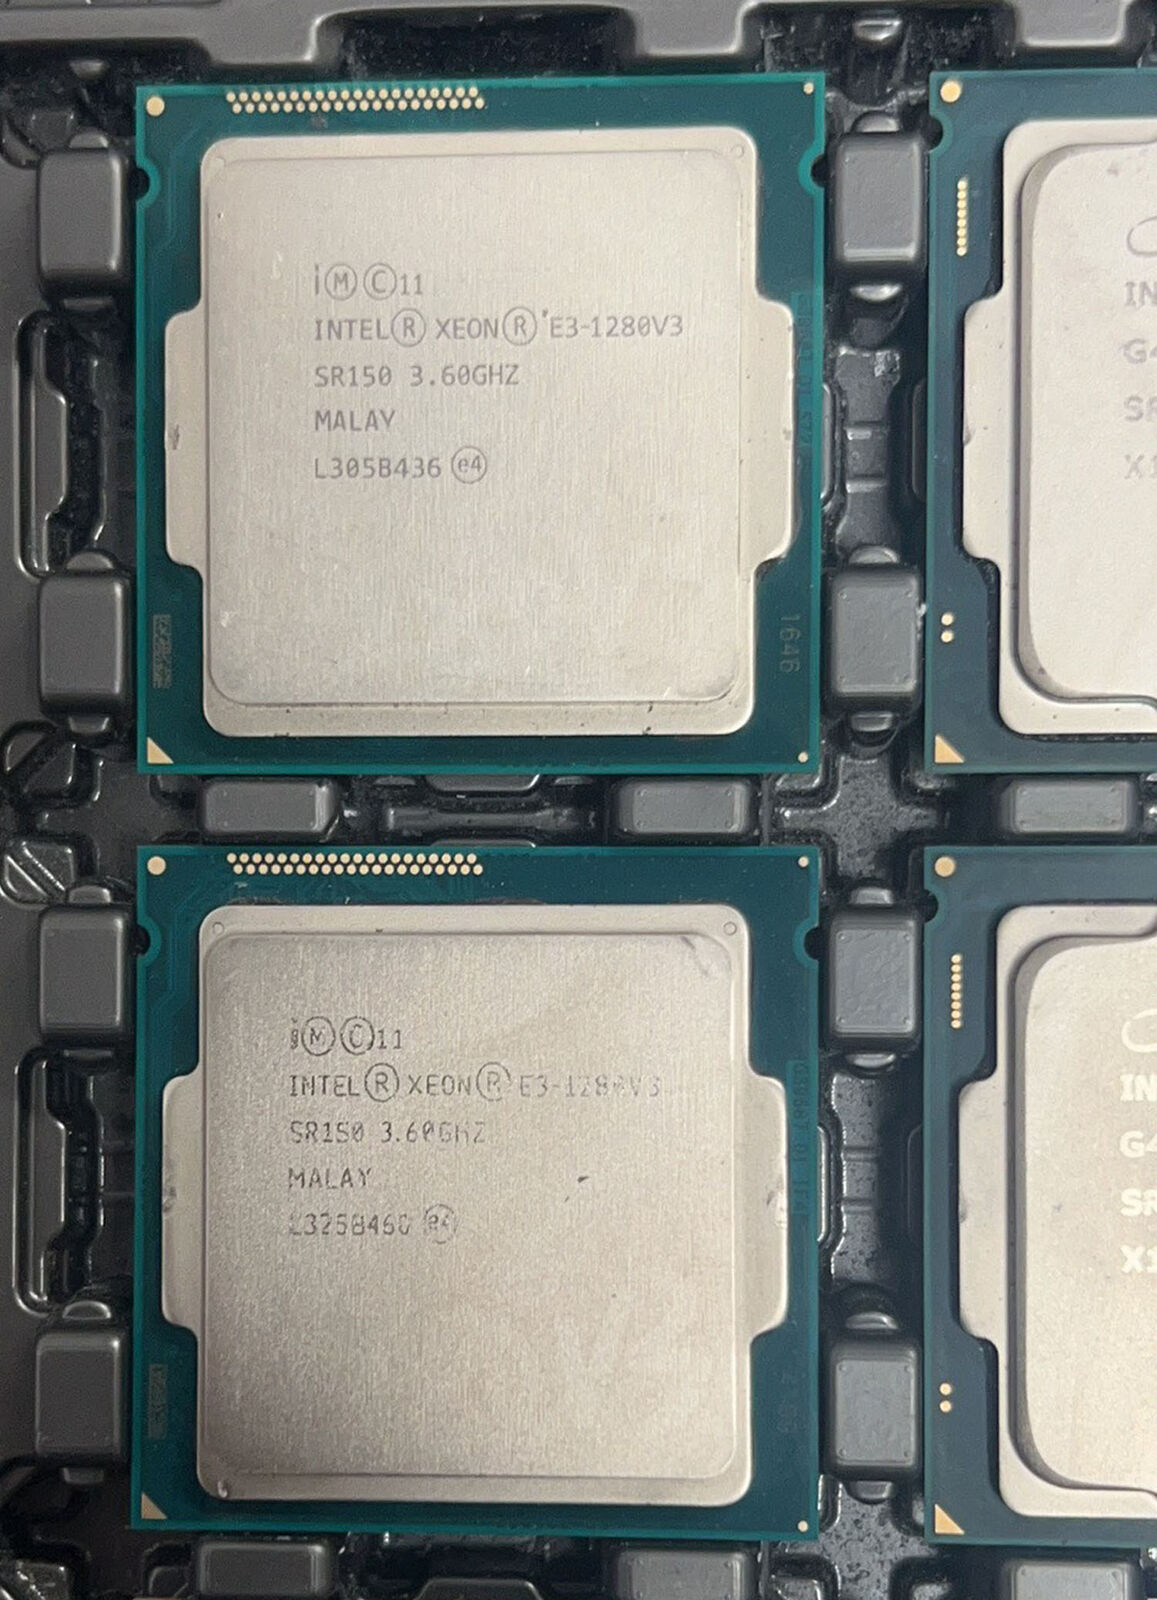 Intel Xeon E3-1280 V3 3.6GHz 4-core 8-thread 8MB LGA1150 CPU processor